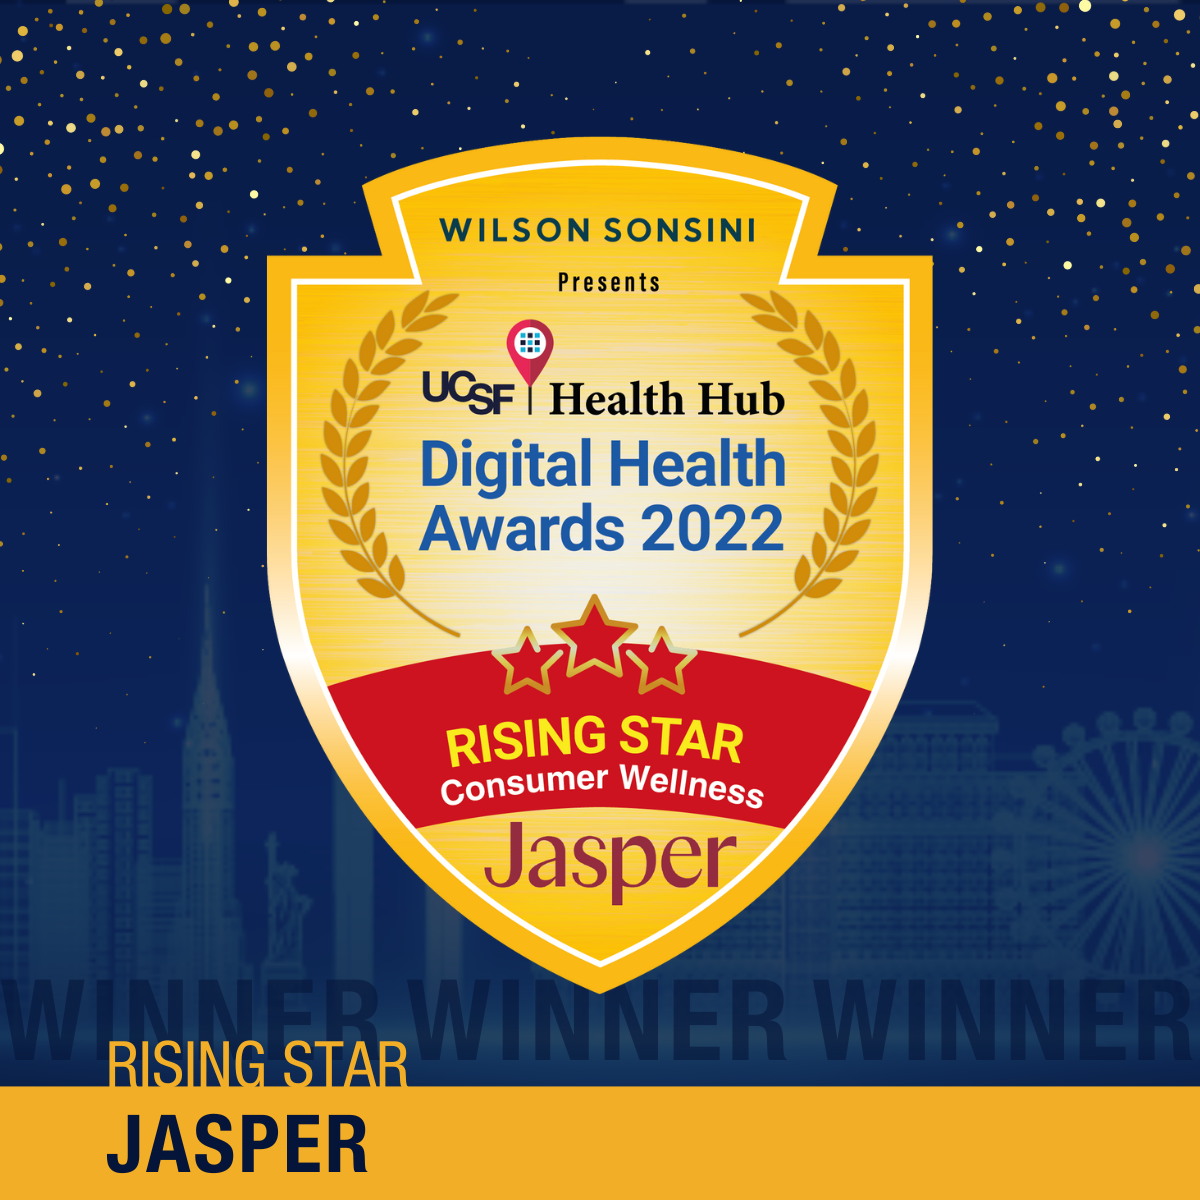 Rising Star gold logo; Wilson Sonsini presents UCSF Health Hub Digital Health Award 2022; Rising Star Consumer Wellness Jasper